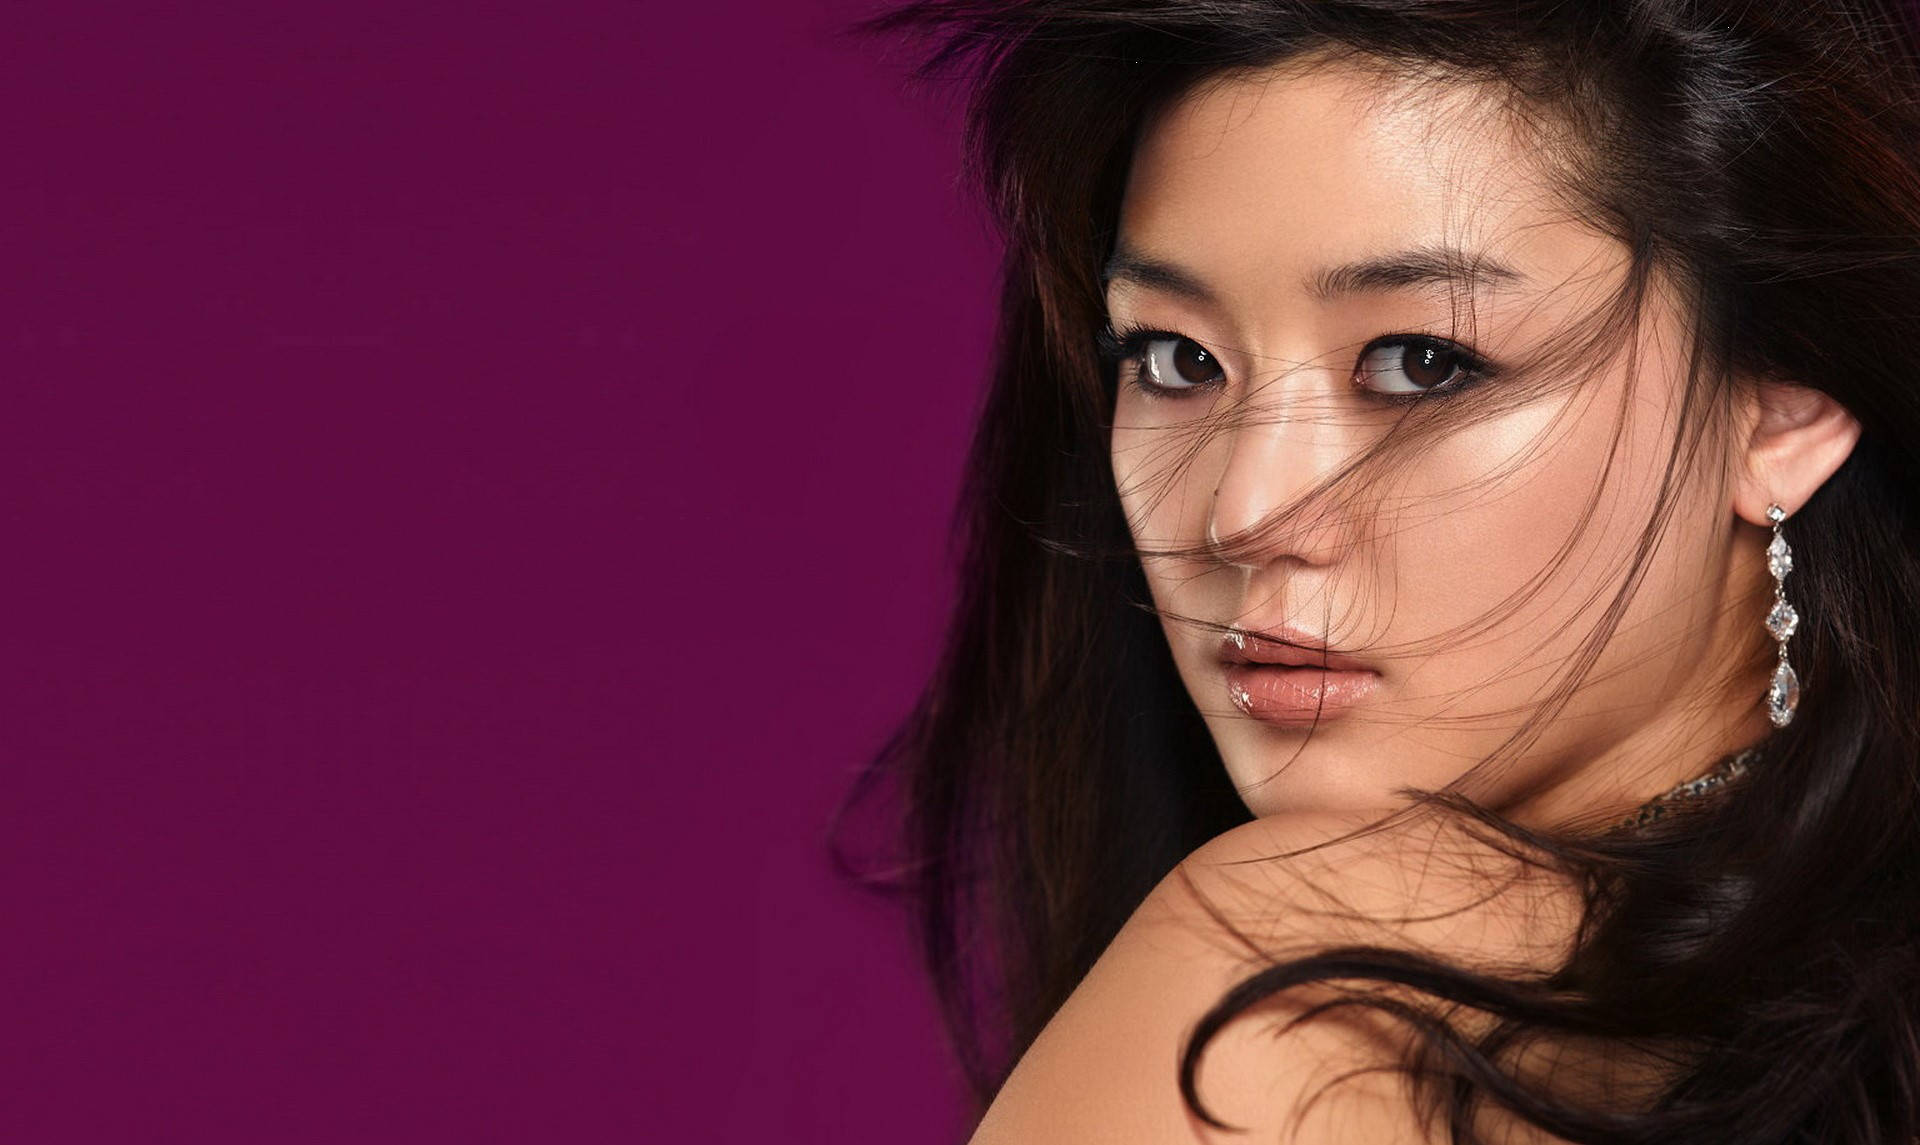 South Korean Actress Jun Ji Hyun In A Stylized Photoshoot